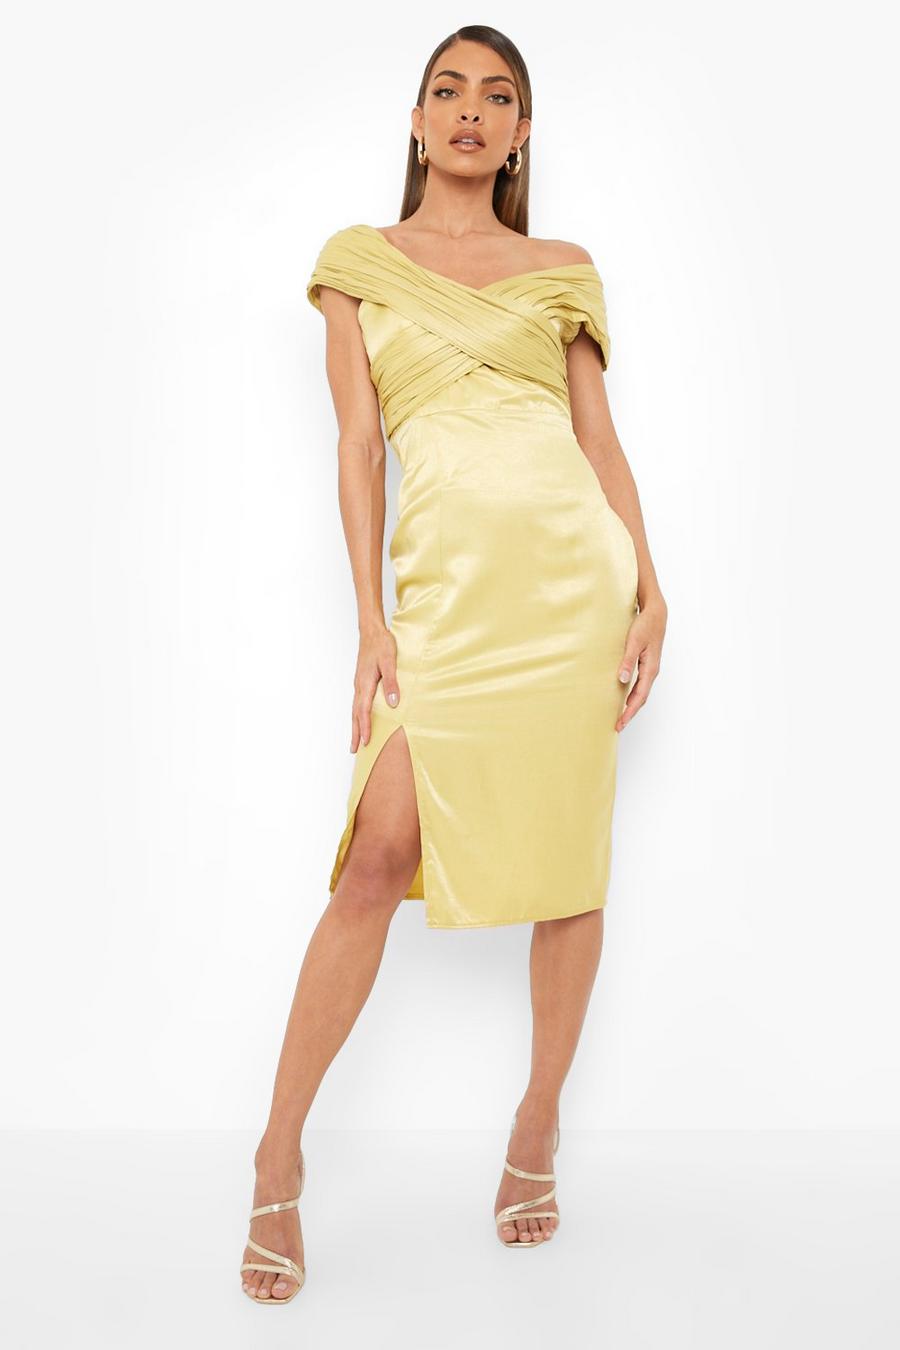 Chartreuse yellow One Shoulder Midi Bridesmaid Dress